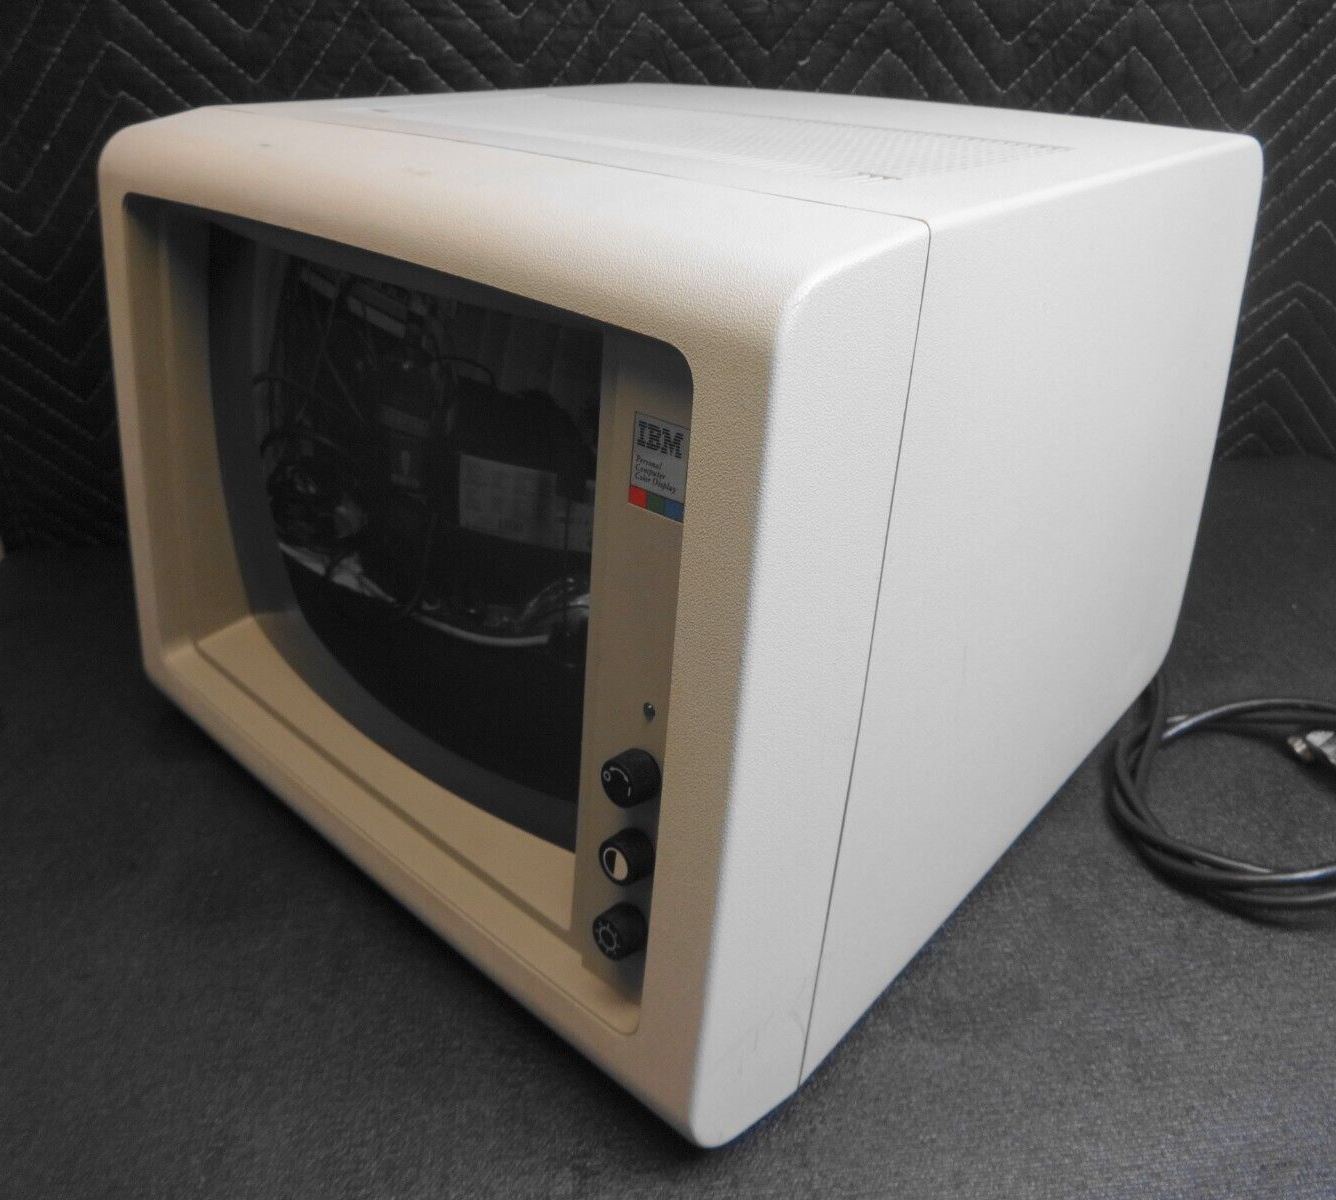 Vintage 1980s IBM 5153 Monitor Personal Computer Color Display CRT CGA Graphics